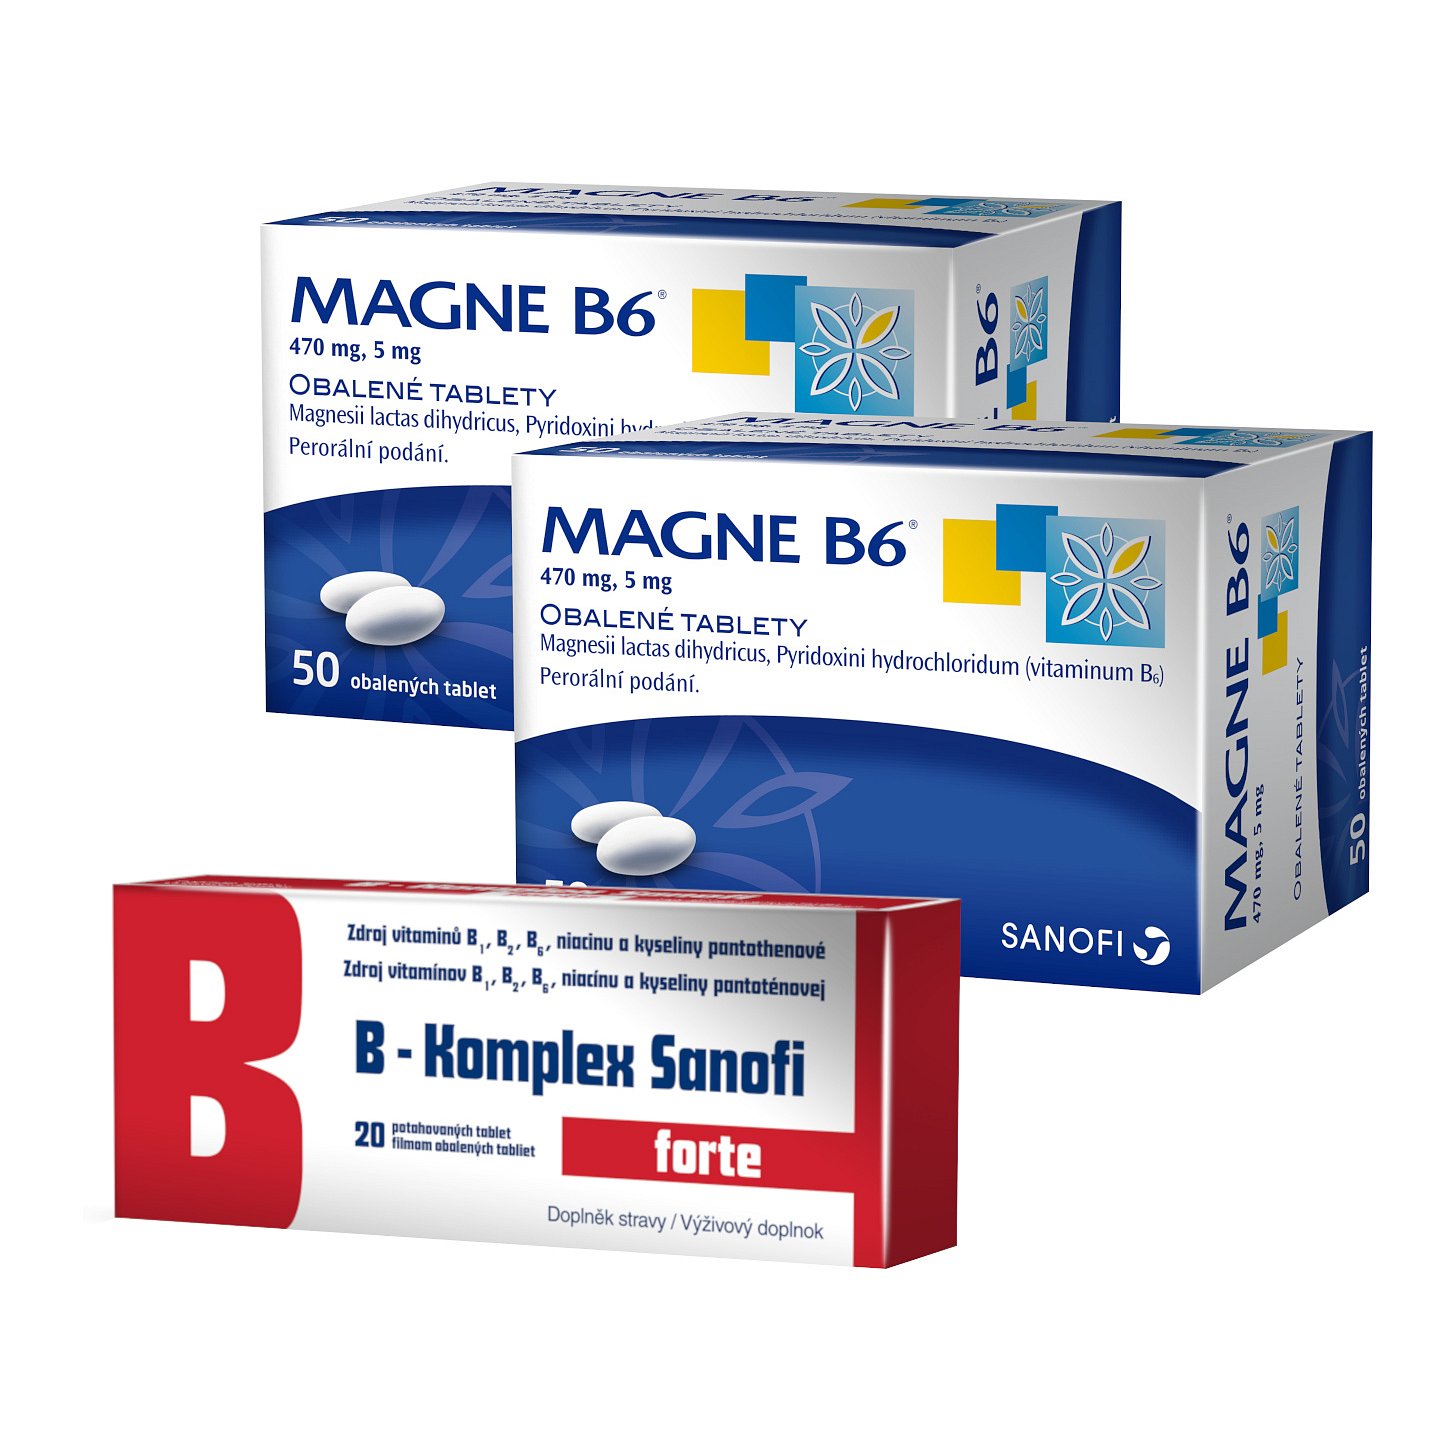 Magne B6, 2x50 obalených tablet + B-Komplex forte Sanofi 20 tablet